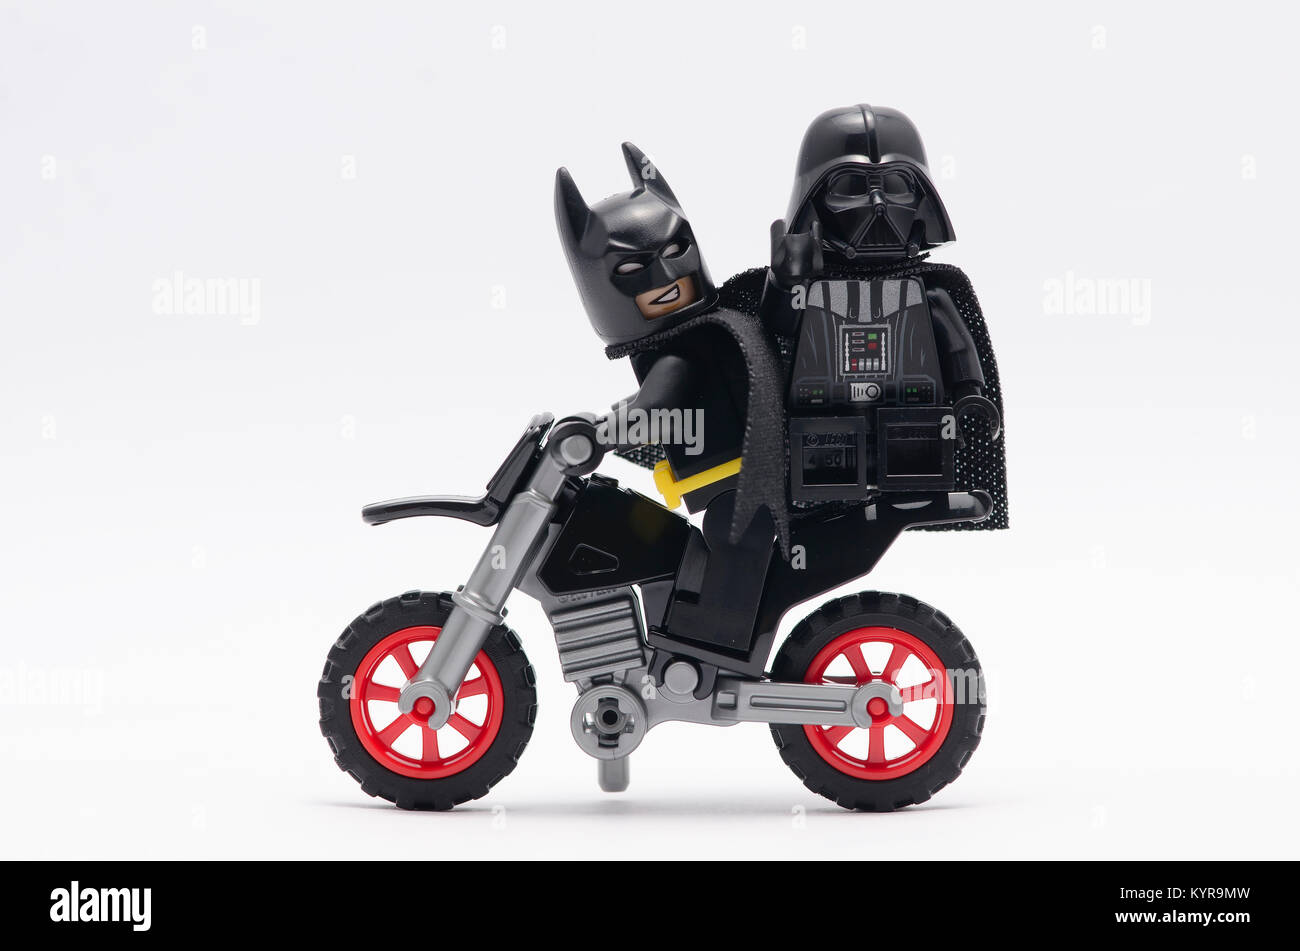 Lego Batman equitazione dirt bike con Darth Vader Foto stock - Alamy